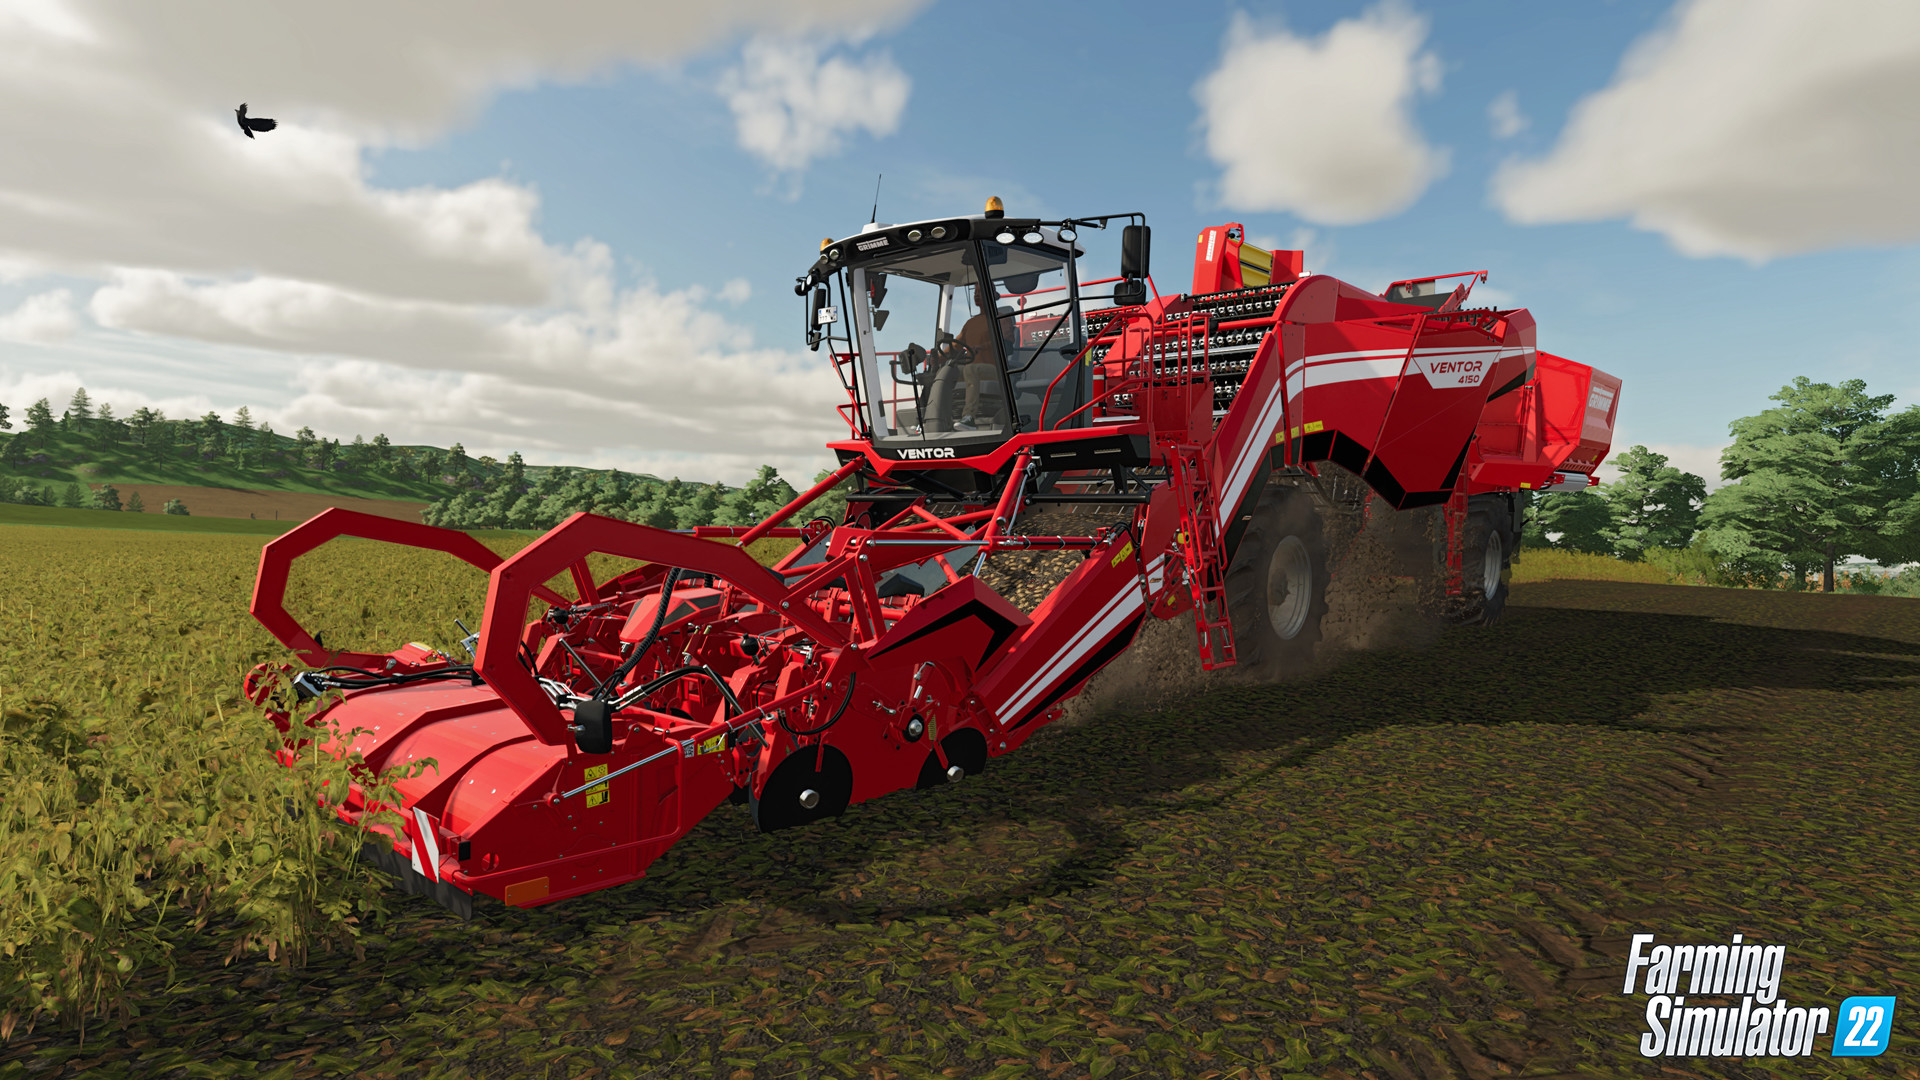 Farming Simulator 22 - Premium Edition - Jeux PC - Boutique Gamer